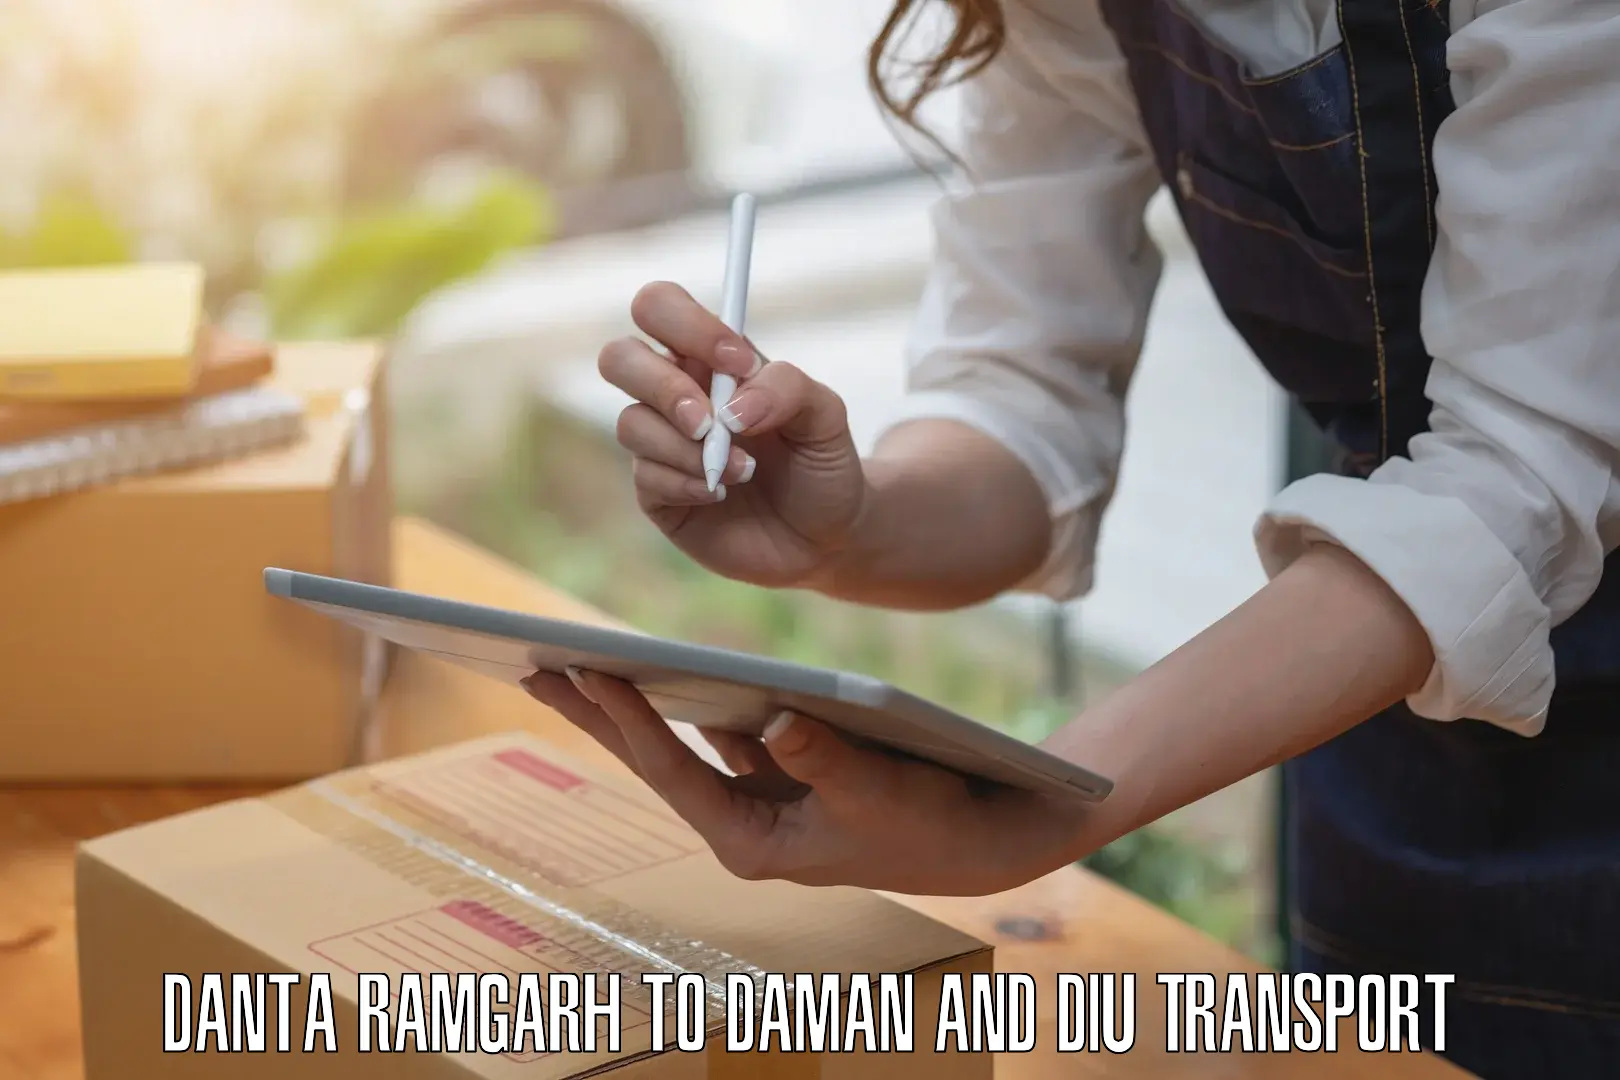 Transport in sharing Danta Ramgarh to Diu